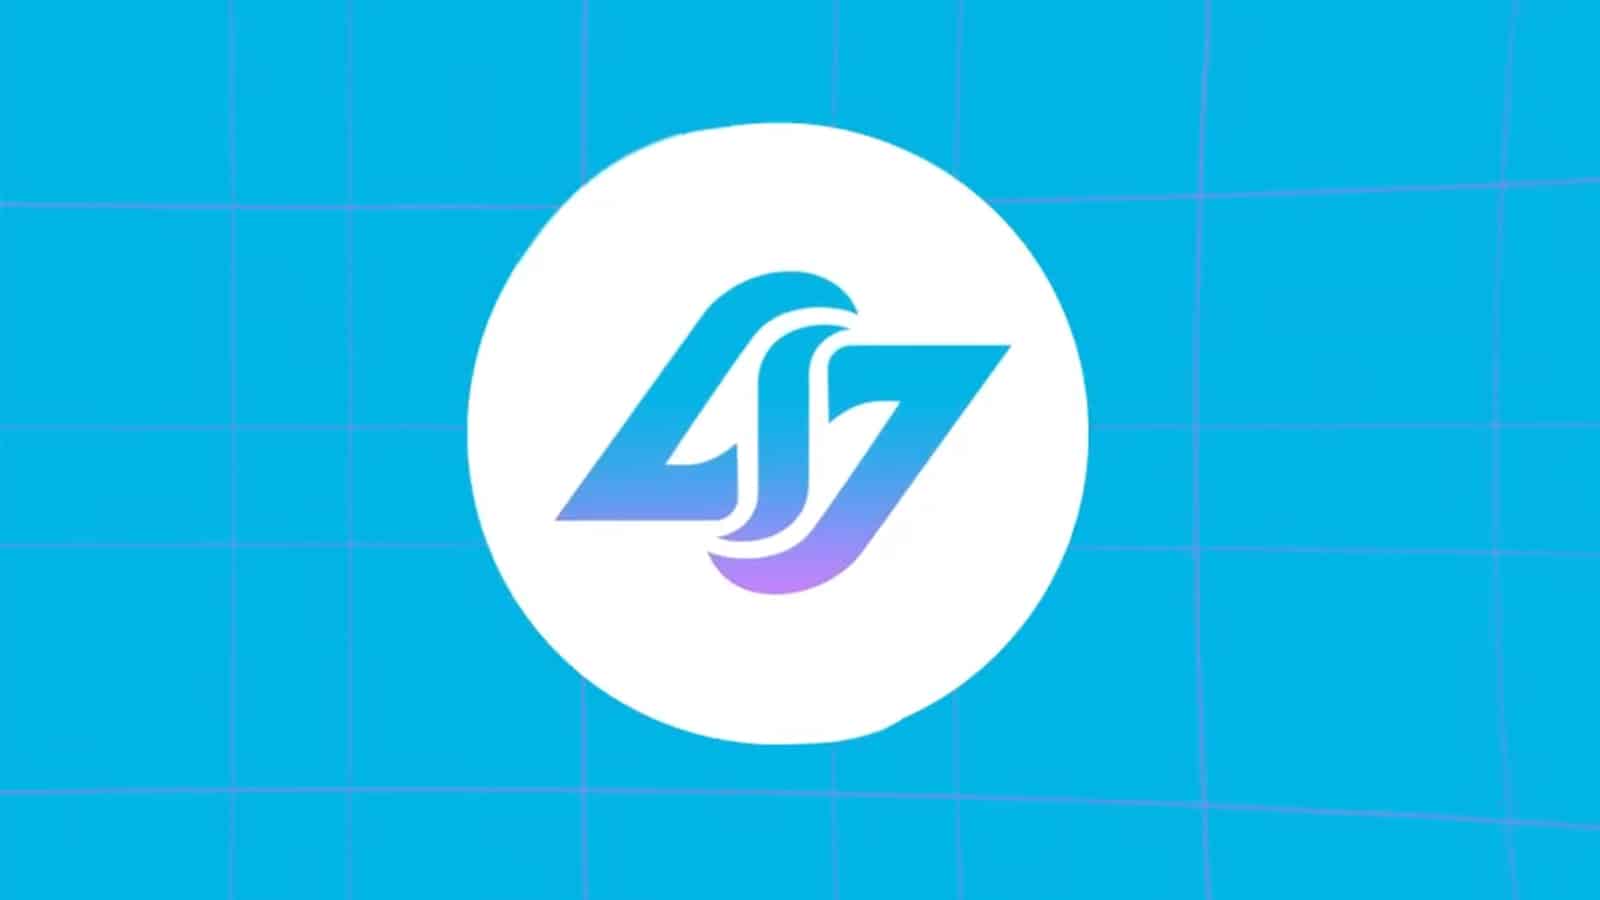 CLG Esports logo